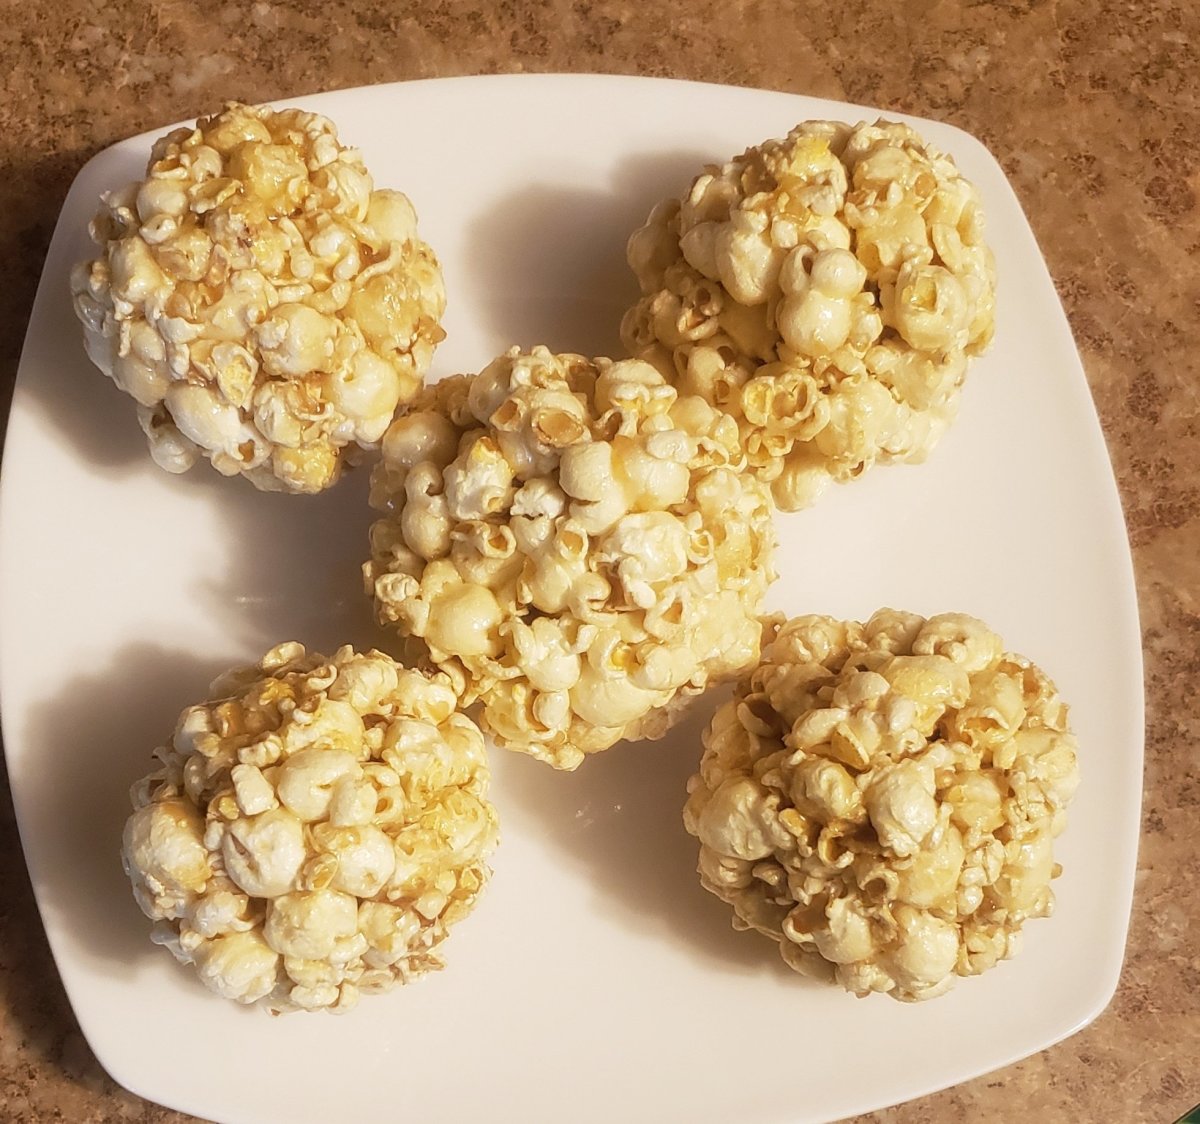 Homemade popcorn balls!